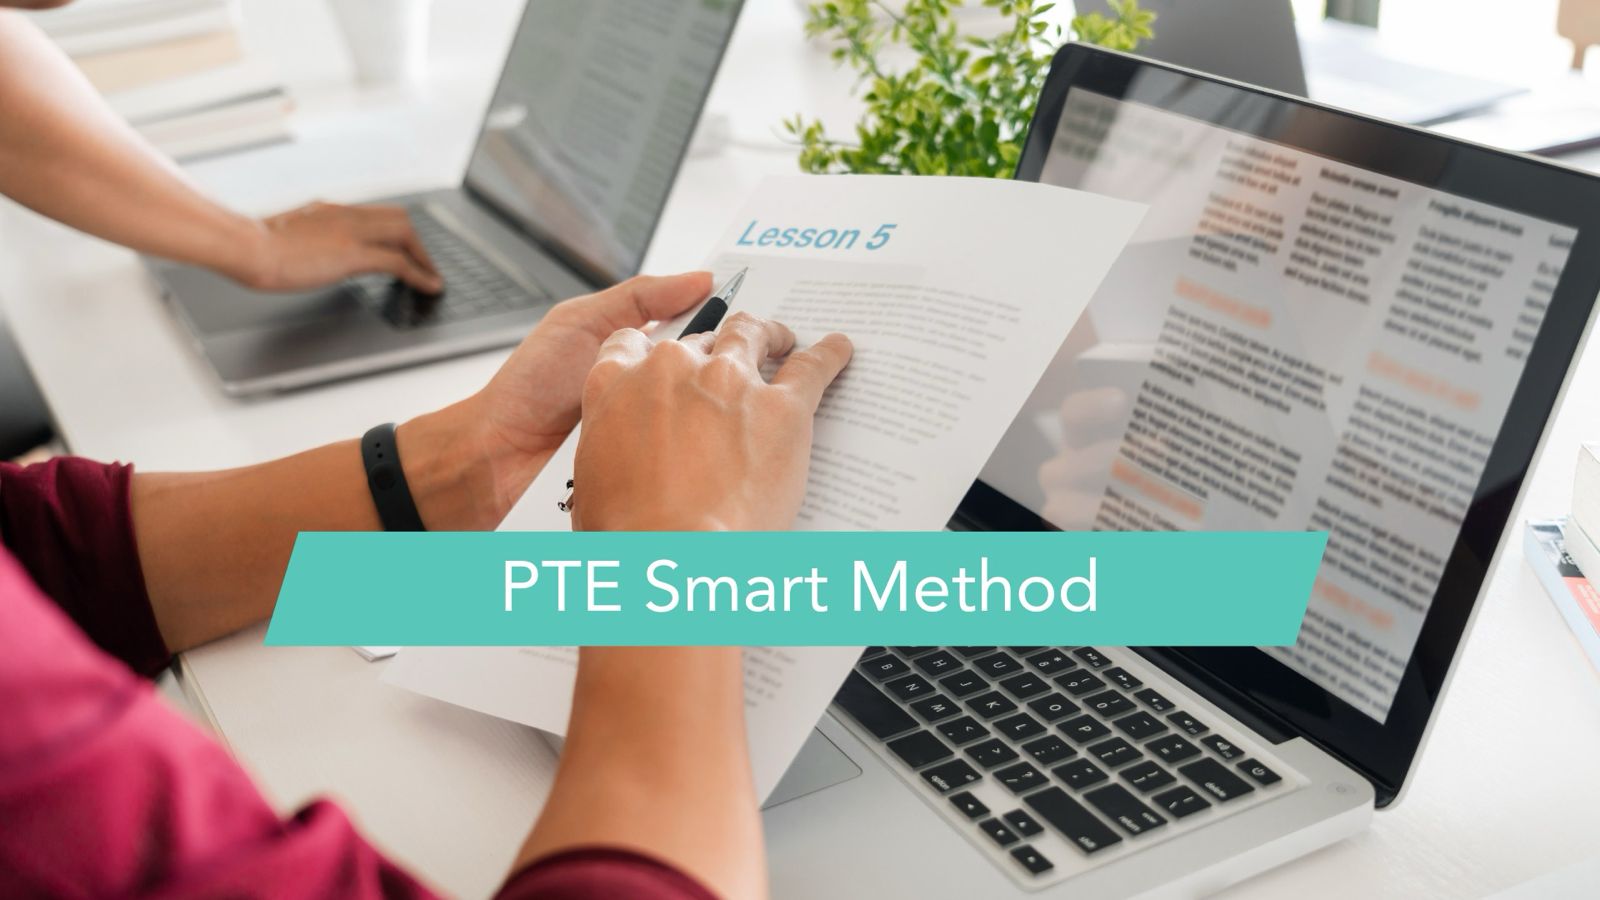 Smart Study method by PTE Smart